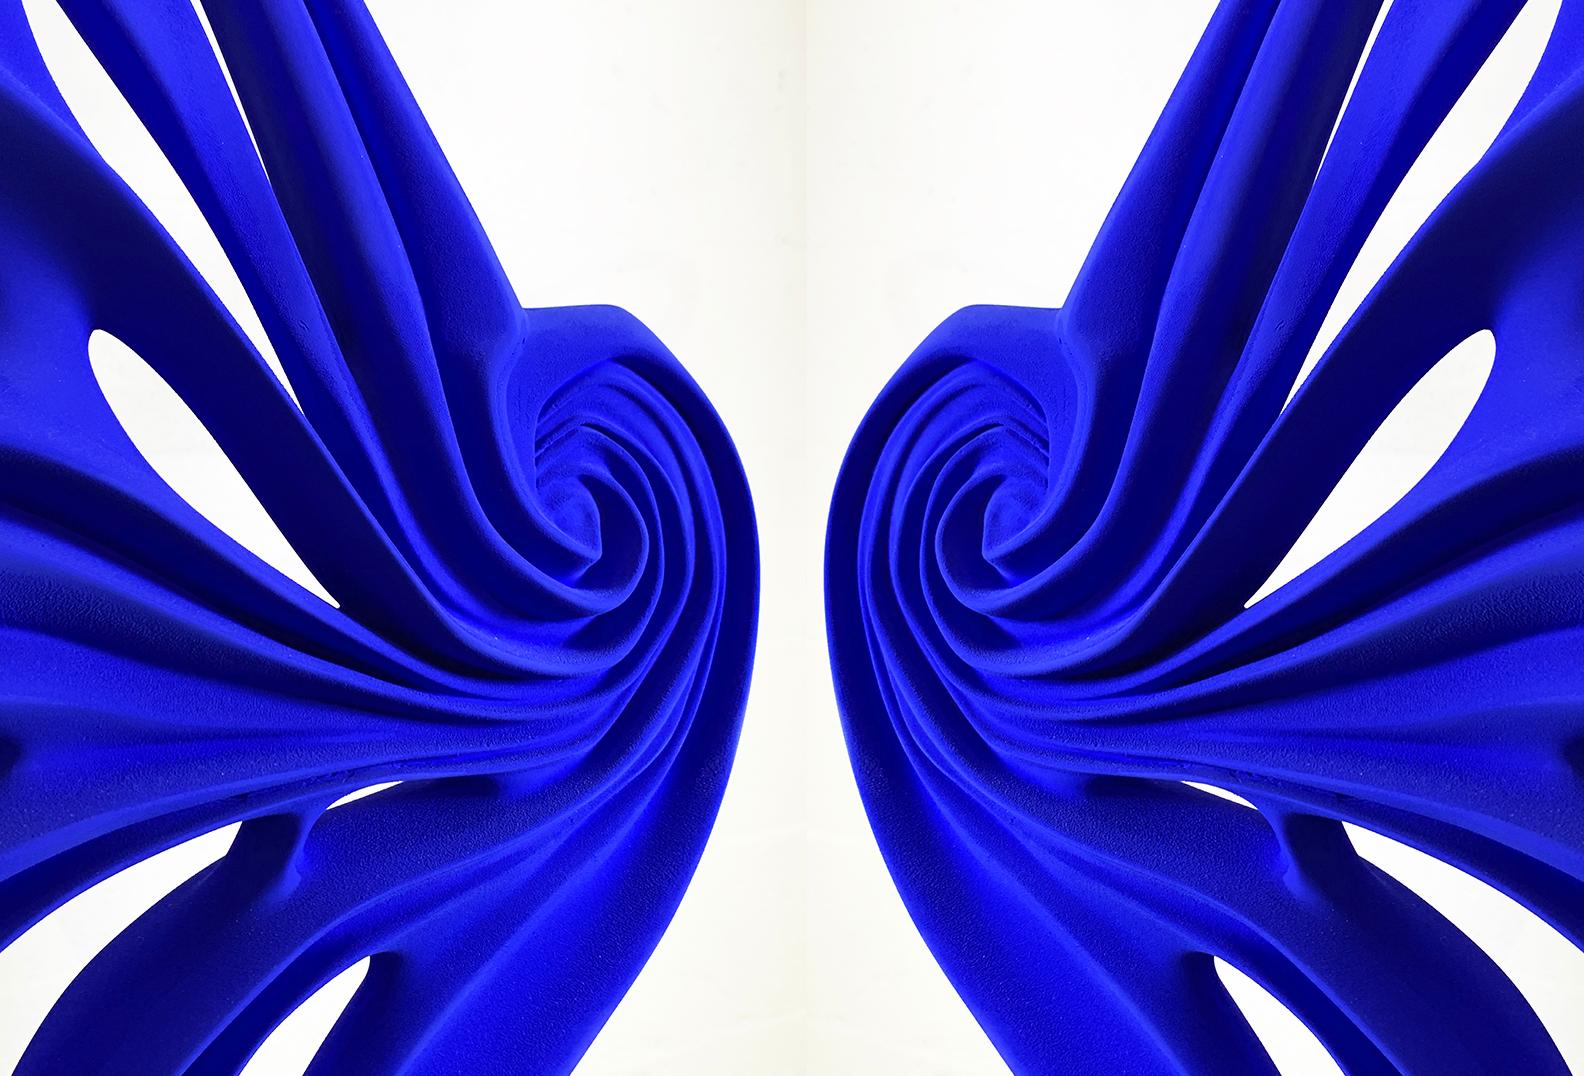 Dream Machine, Matte Blue - Contemporary Sculpture by Rubem Robierb